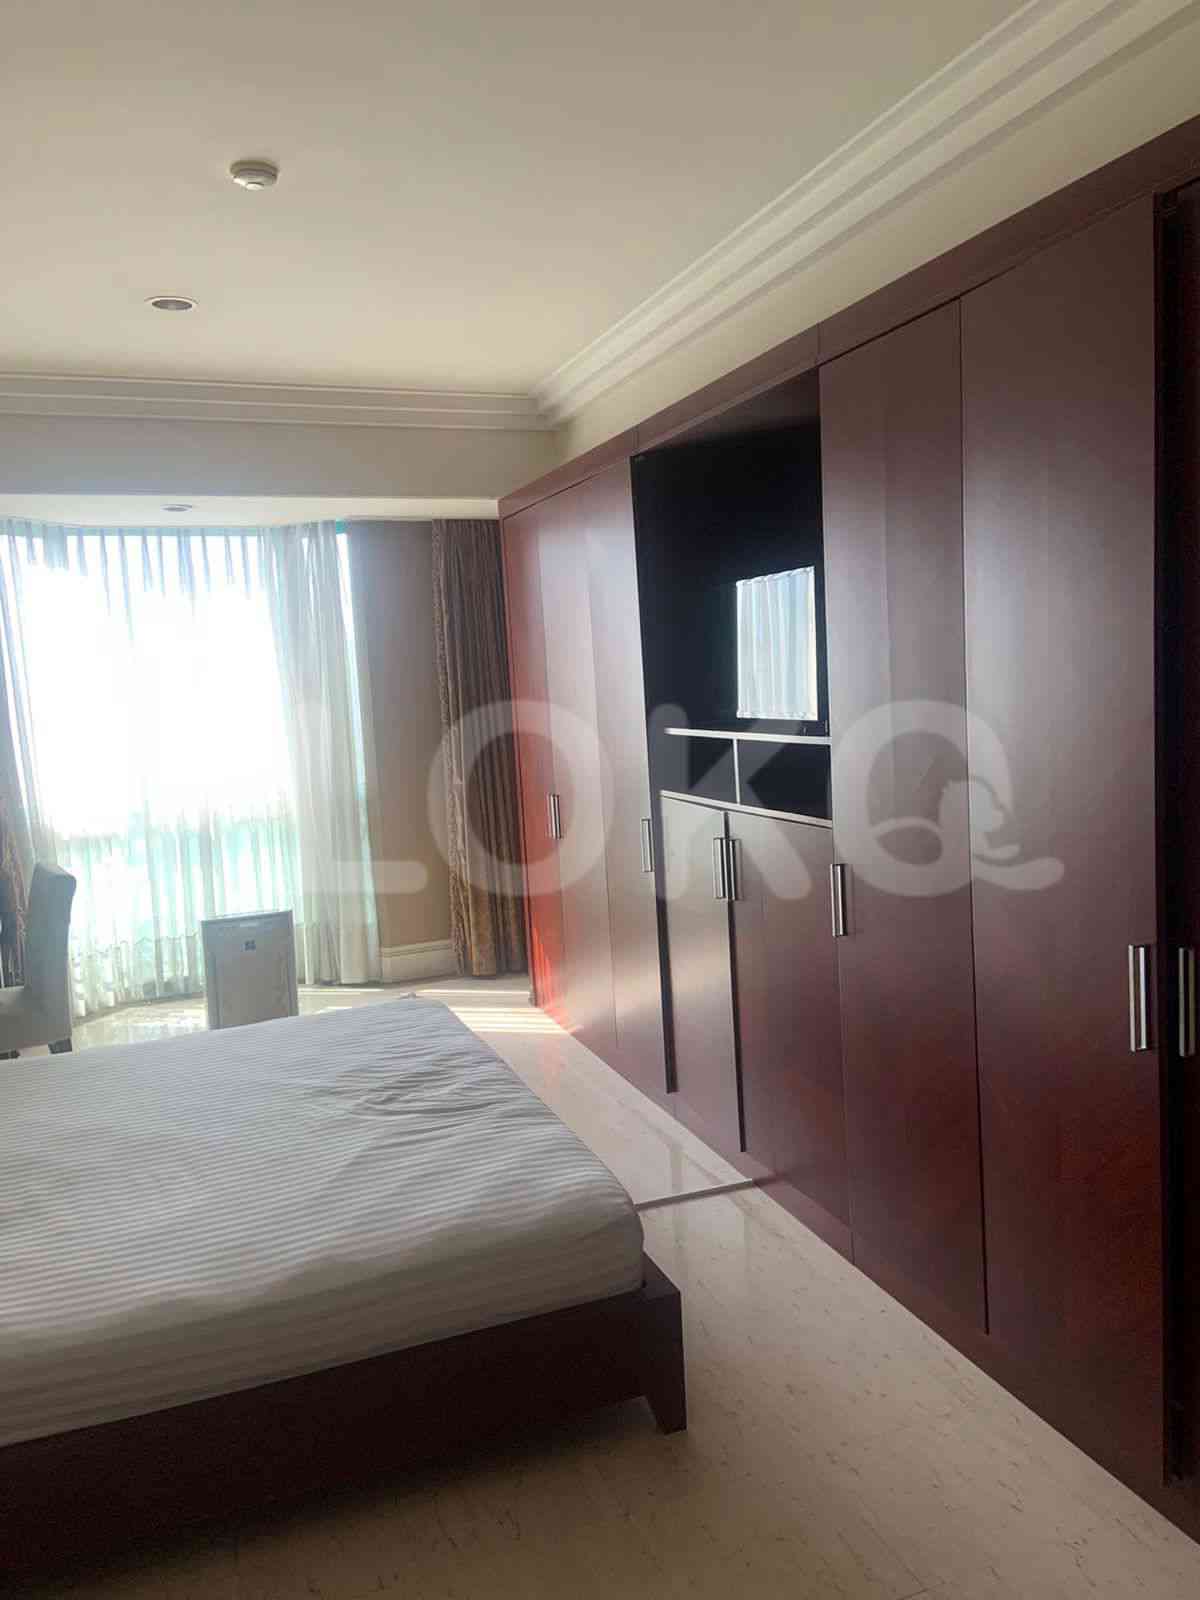 2 Bedroom on 5th Floor for Rent in Casablanca Apartment - fte5d5 4